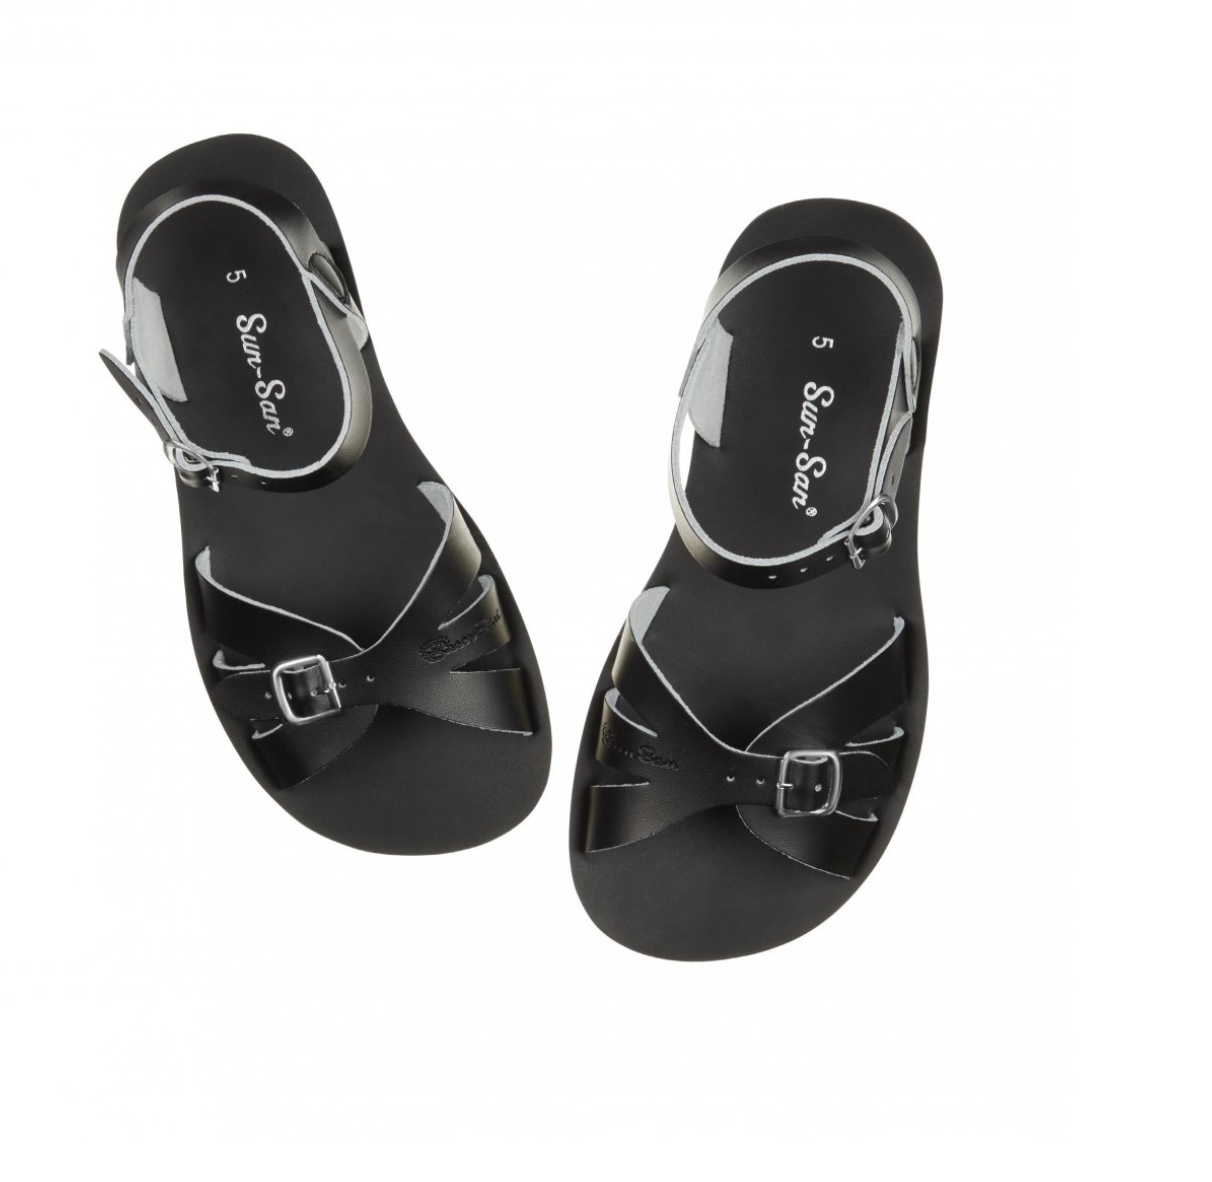 Salt-Water Sandals  - Boardwalk Black